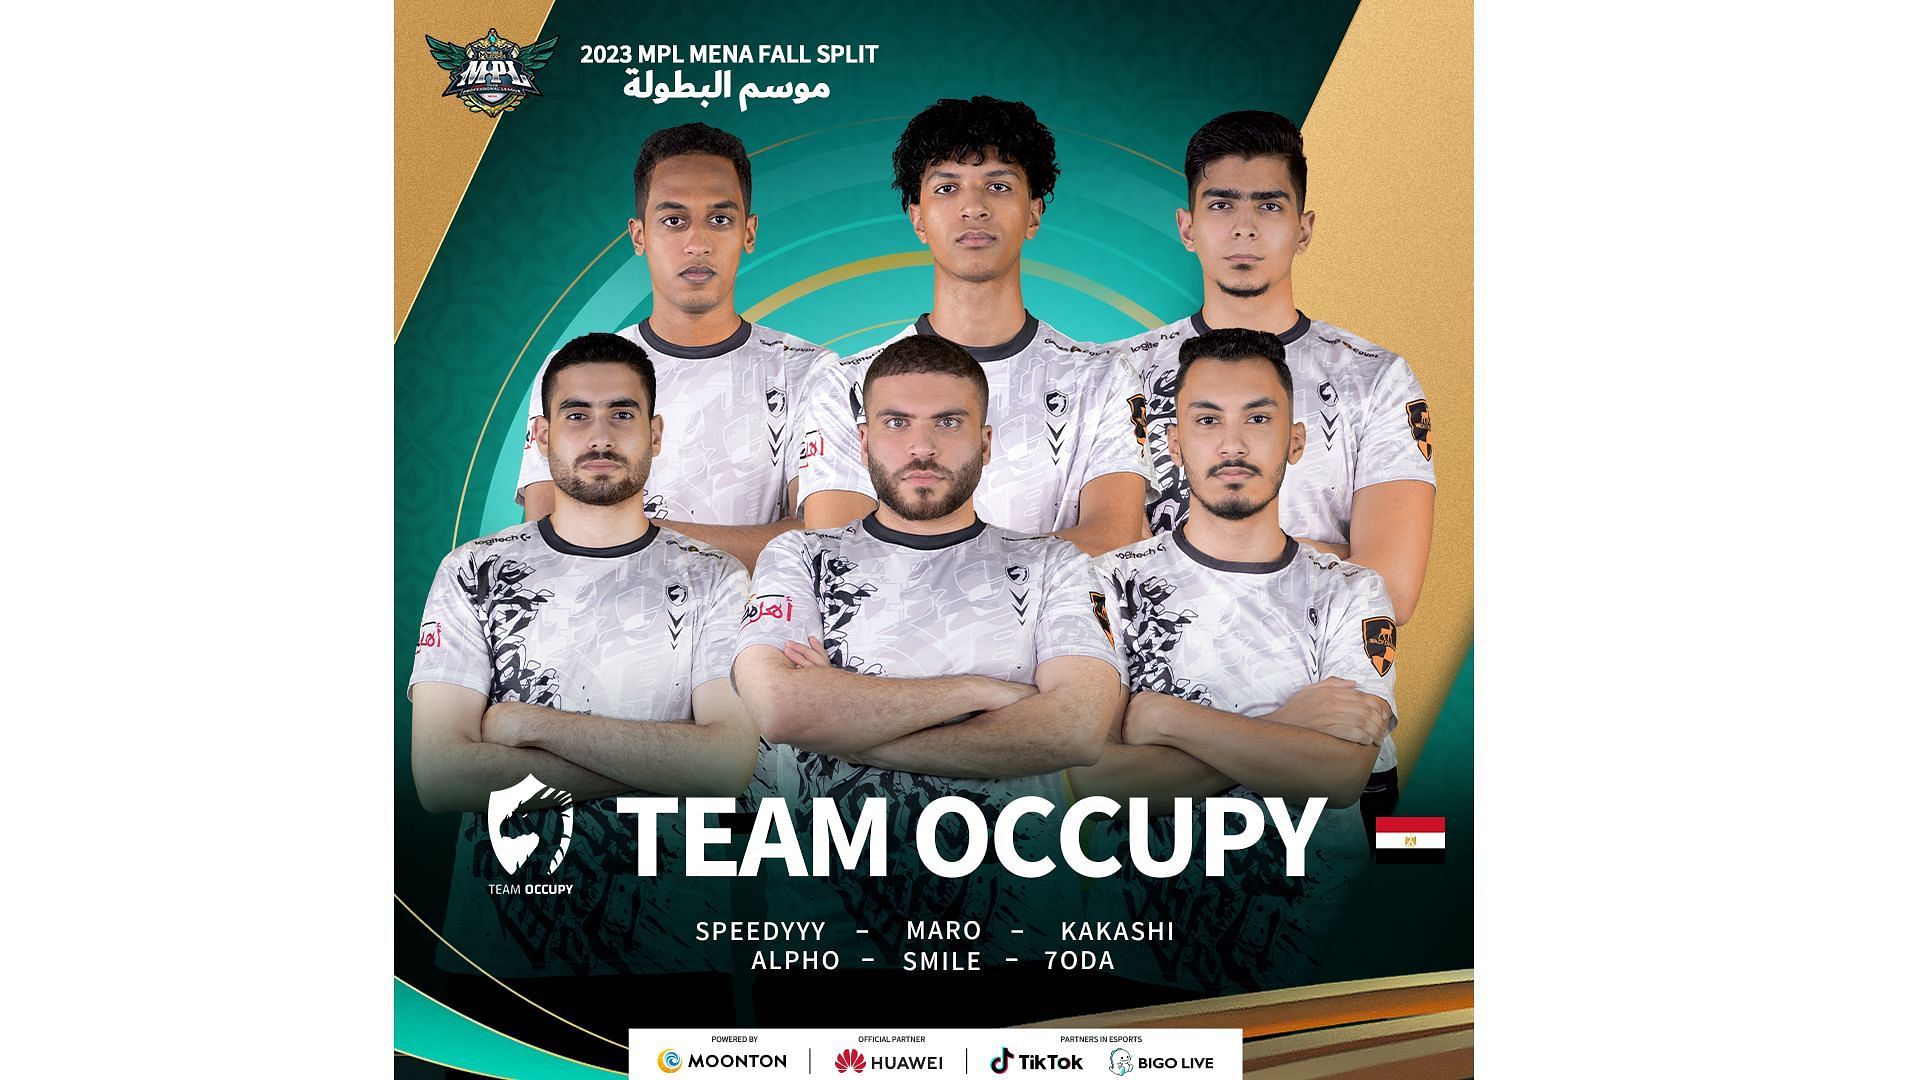 Team Occupy roster in MPL MENA (Image via Moonton Games)